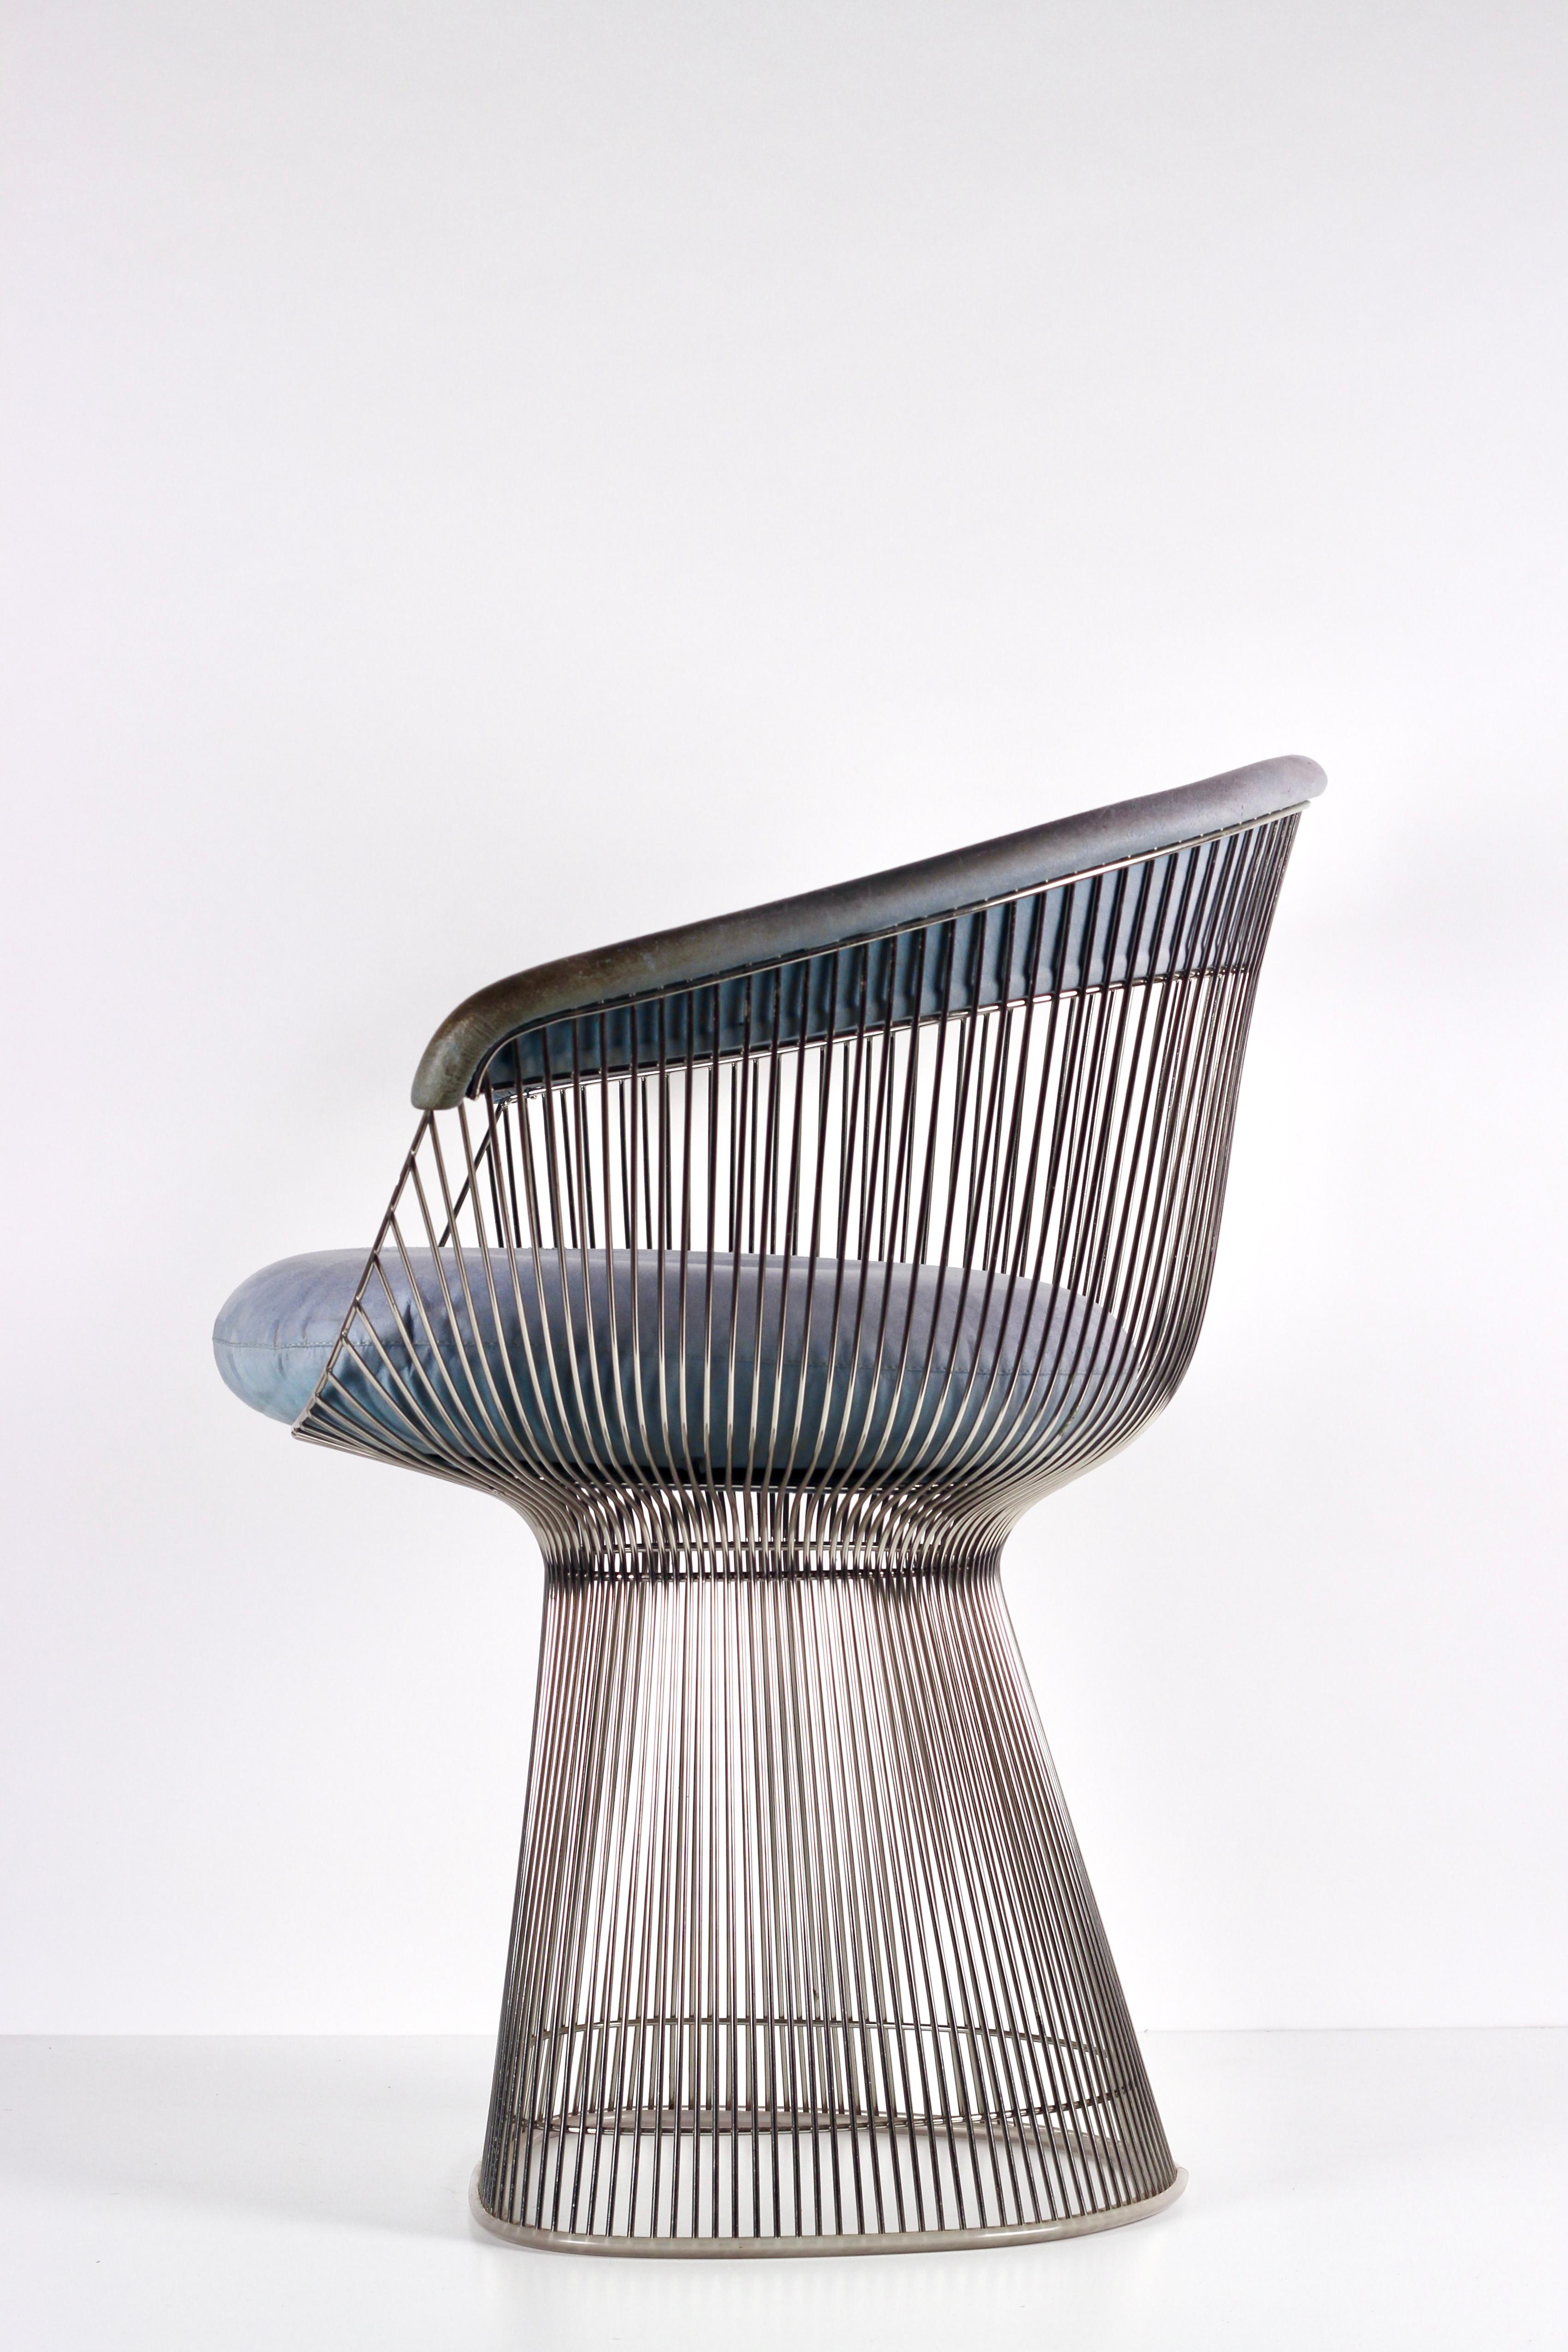 Modern Warren Platner for Knoll classic armchair designed 1966 For Sale